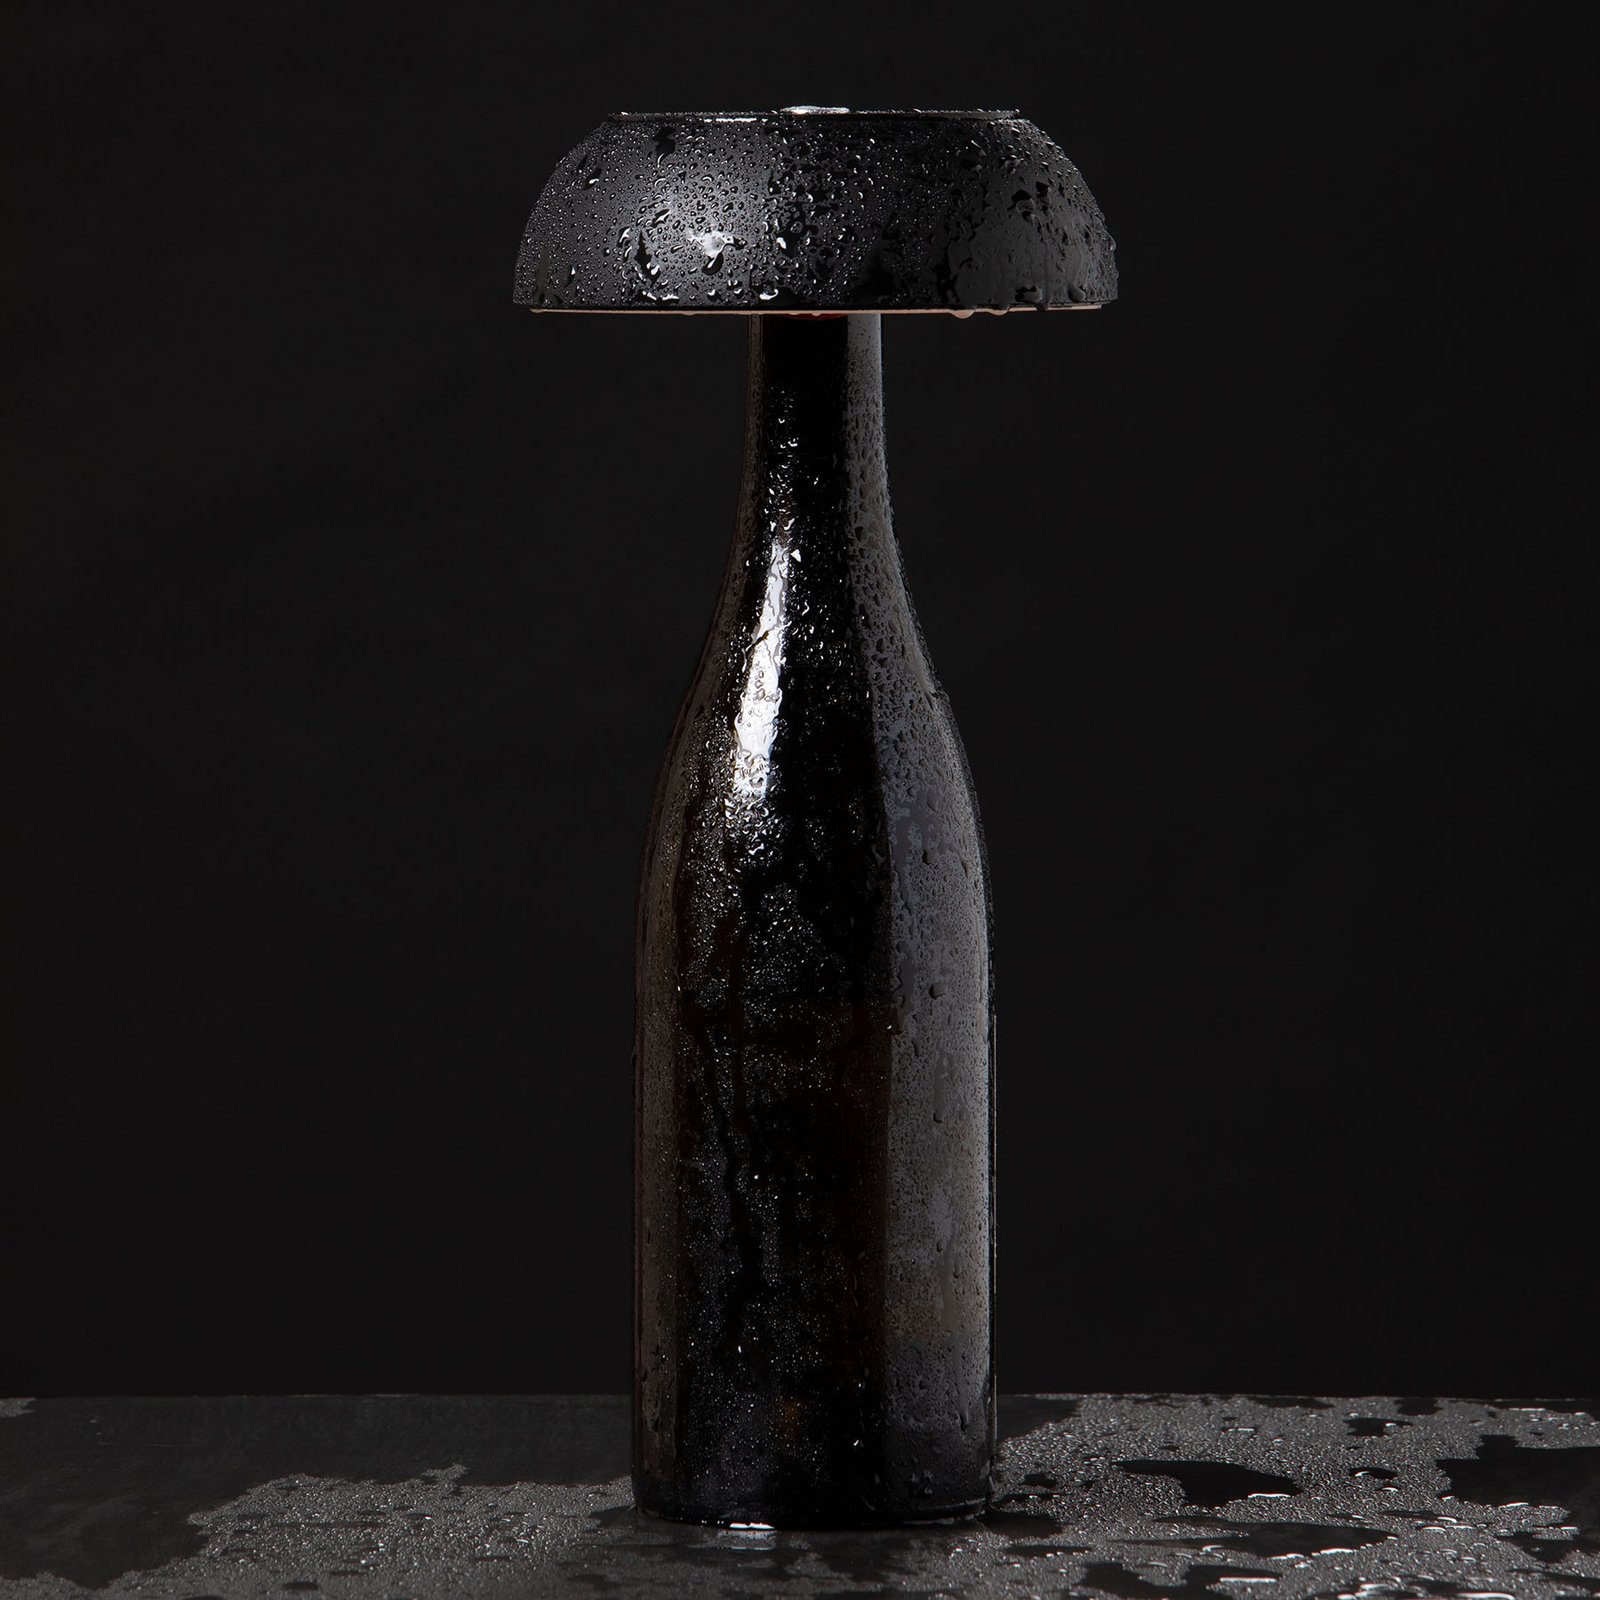 Axolight Float lampe à poser designer LED, noire